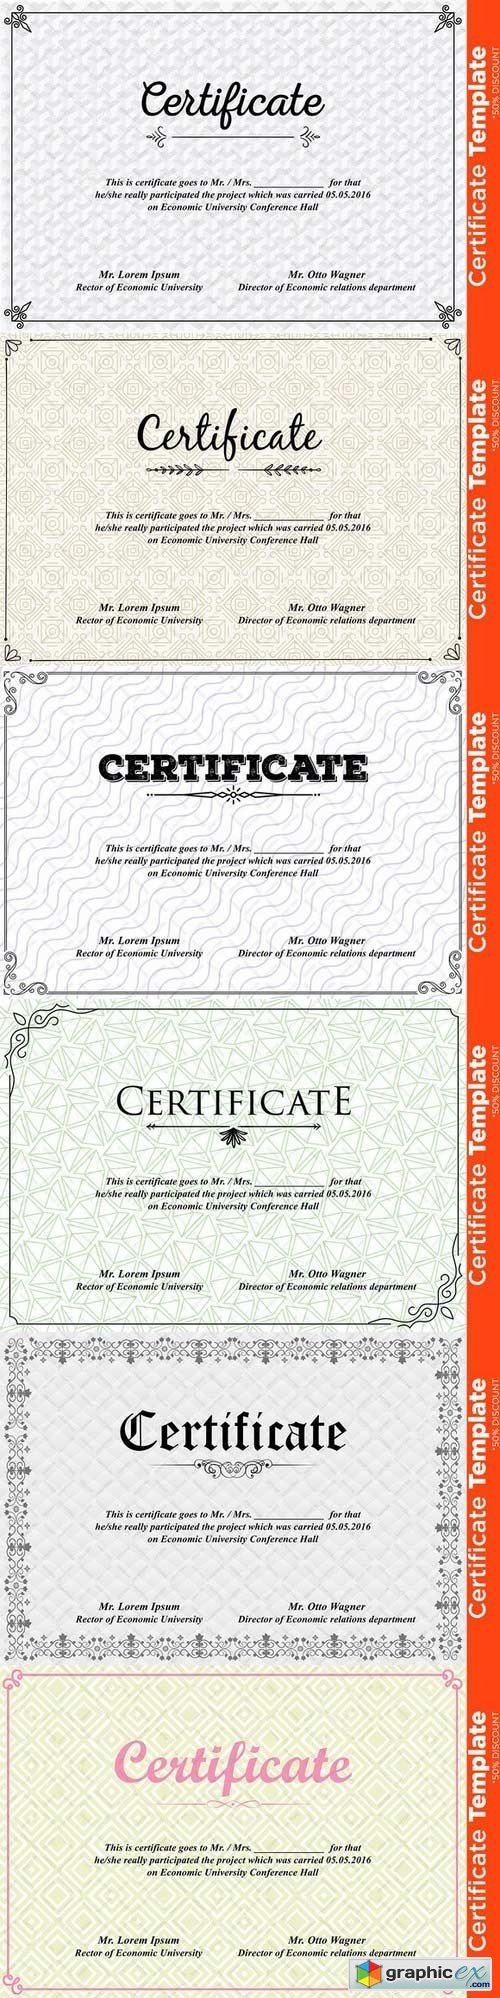 Certificate Template PSD